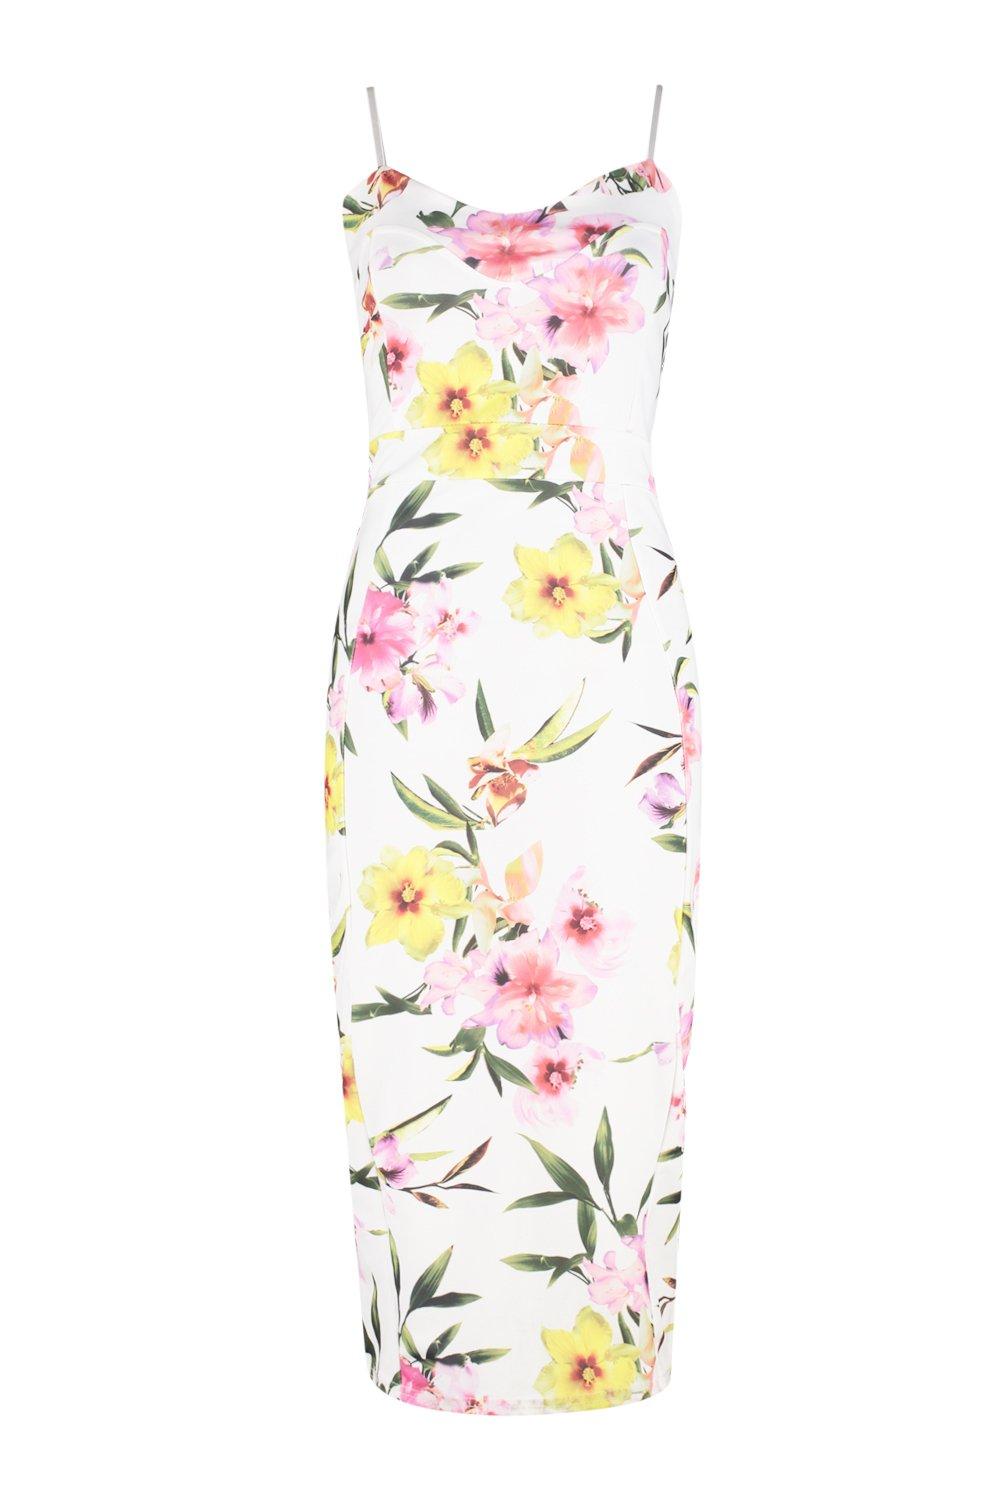 Boohoo Womens Marlena Strappy Floral Midi Bodycon Dress | eBay